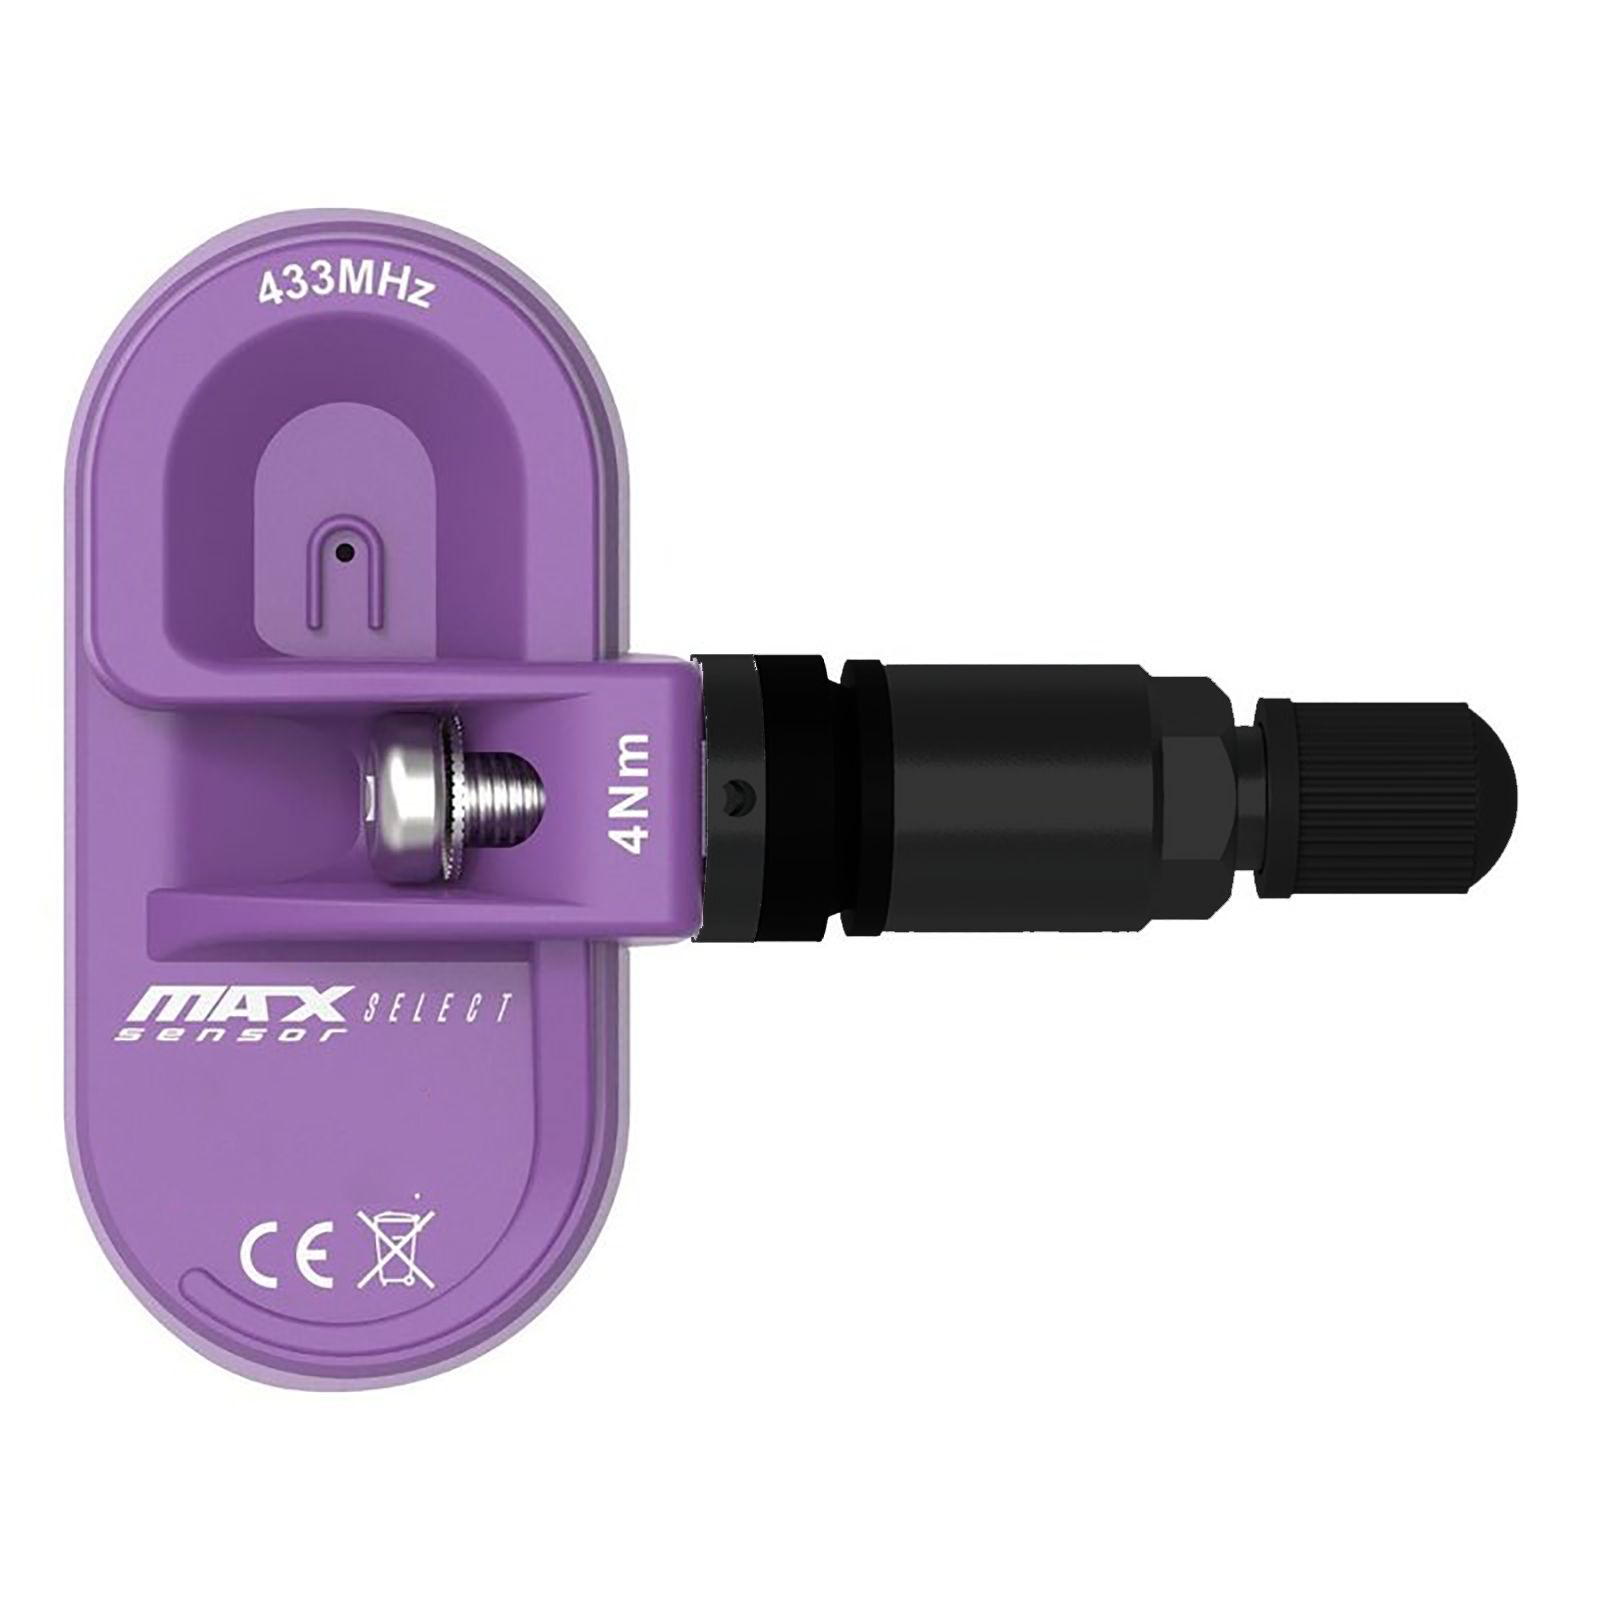 Max Select Sensor Schwarz-1150000298